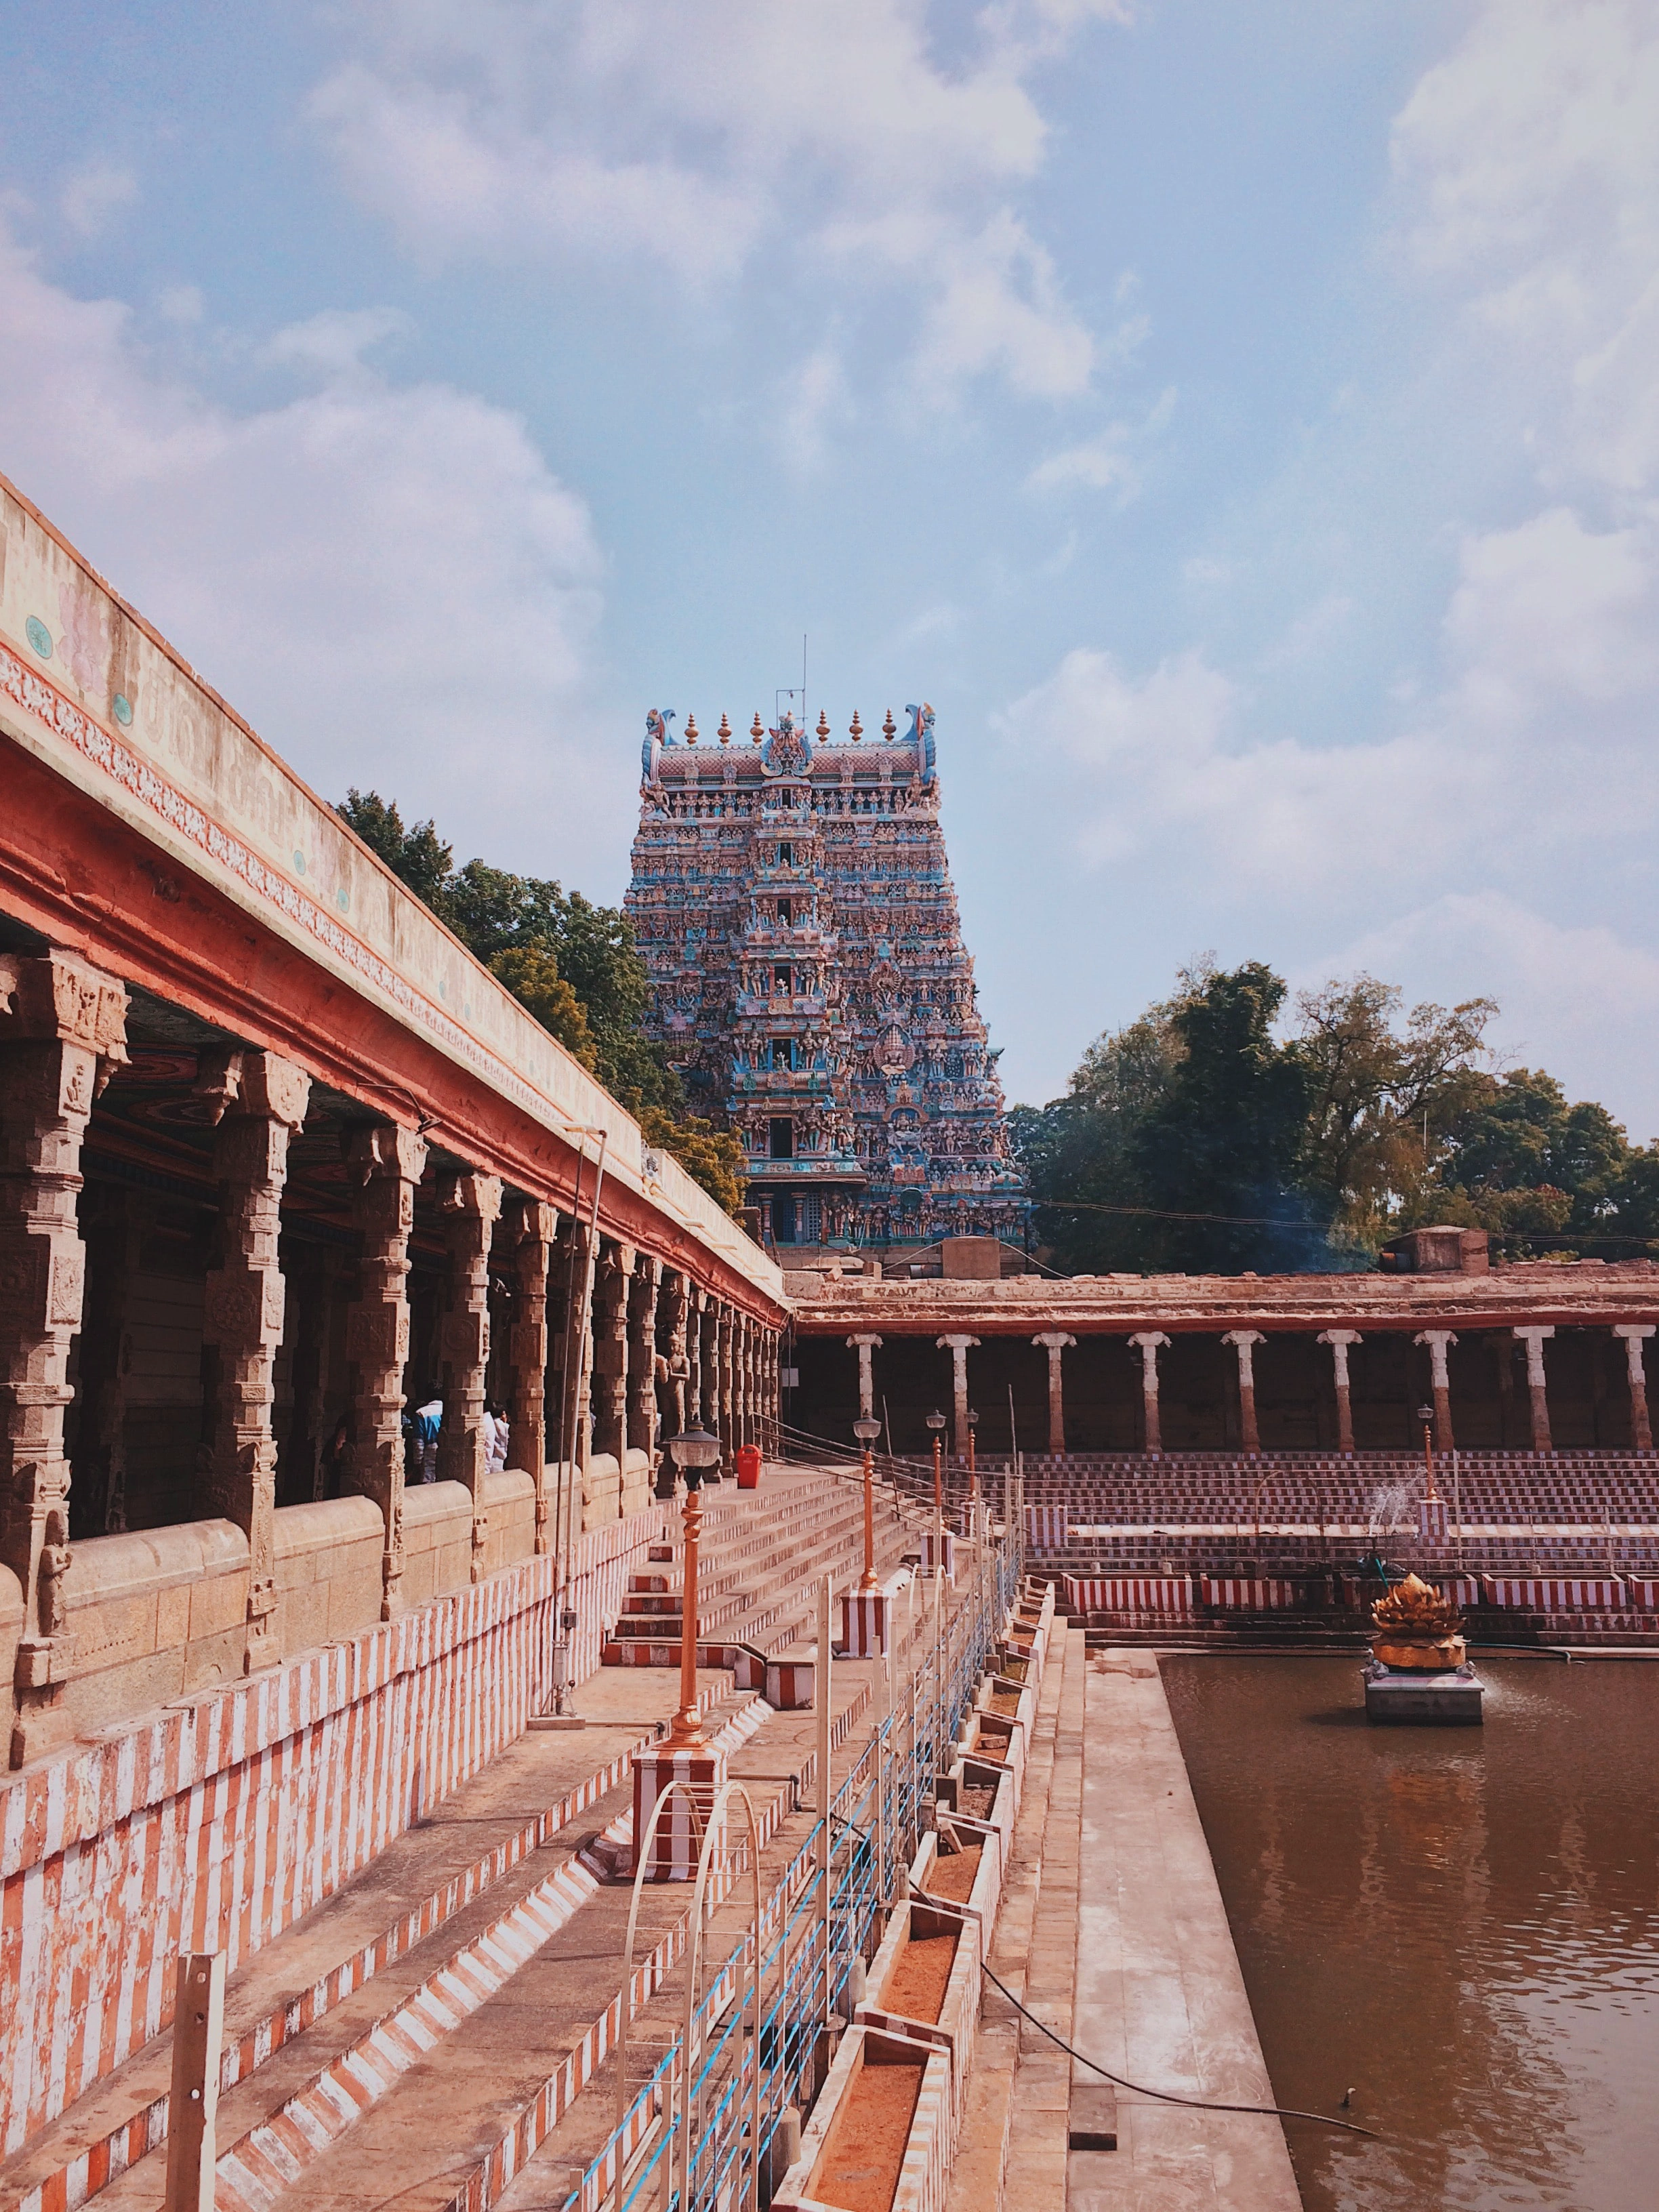 Meenakshi Amman Temple in India